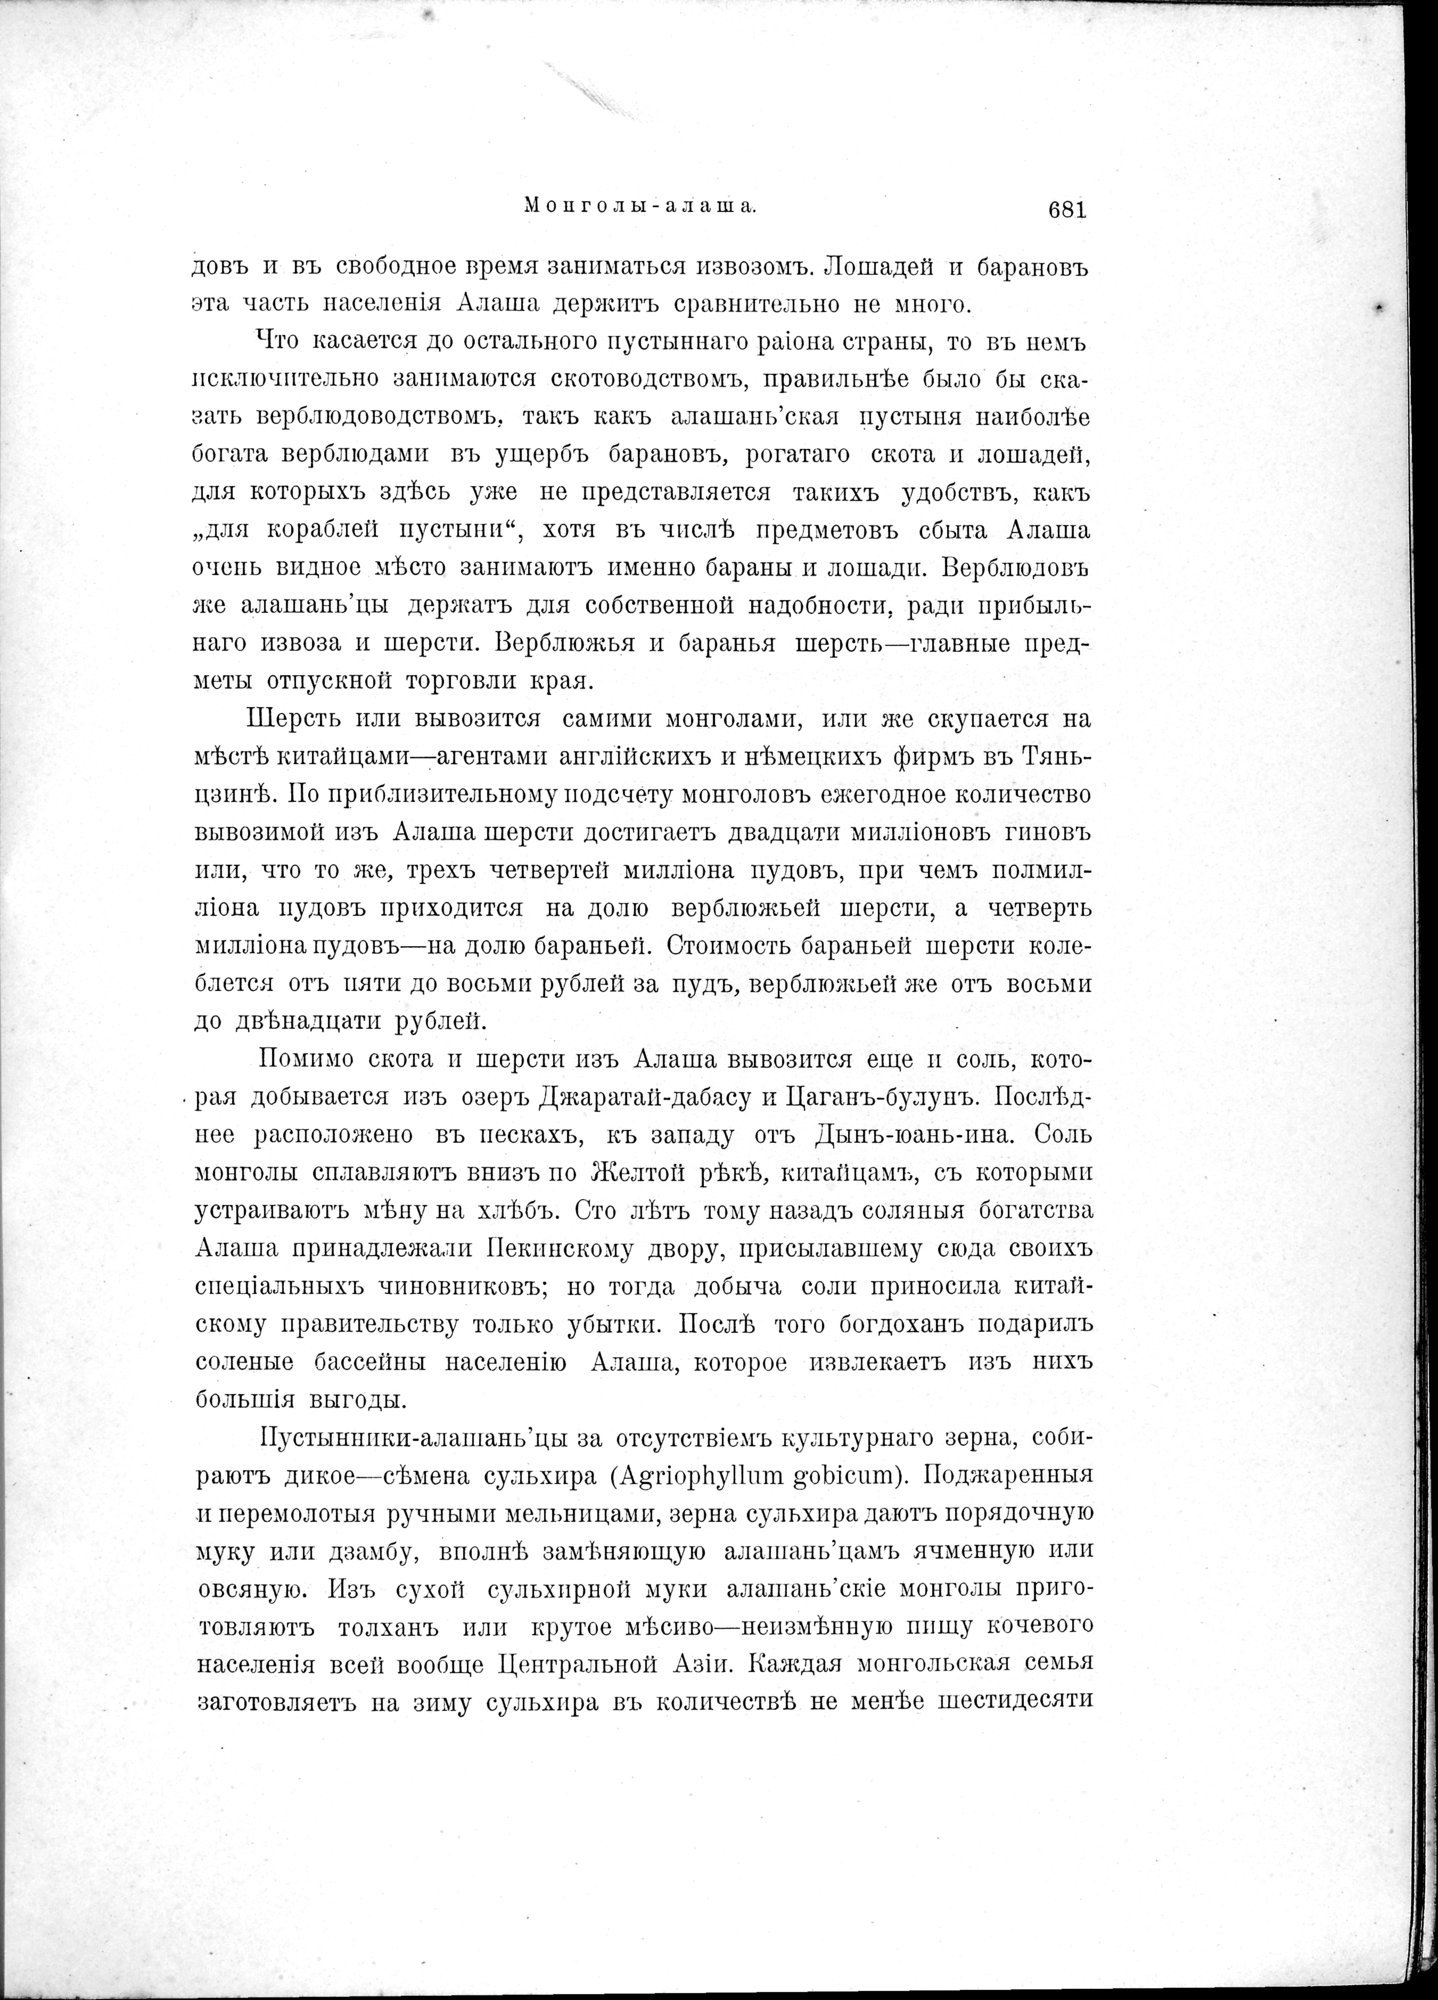 Mongoliia i Kam : vol.2 / Page 515 (Grayscale High Resolution Image)